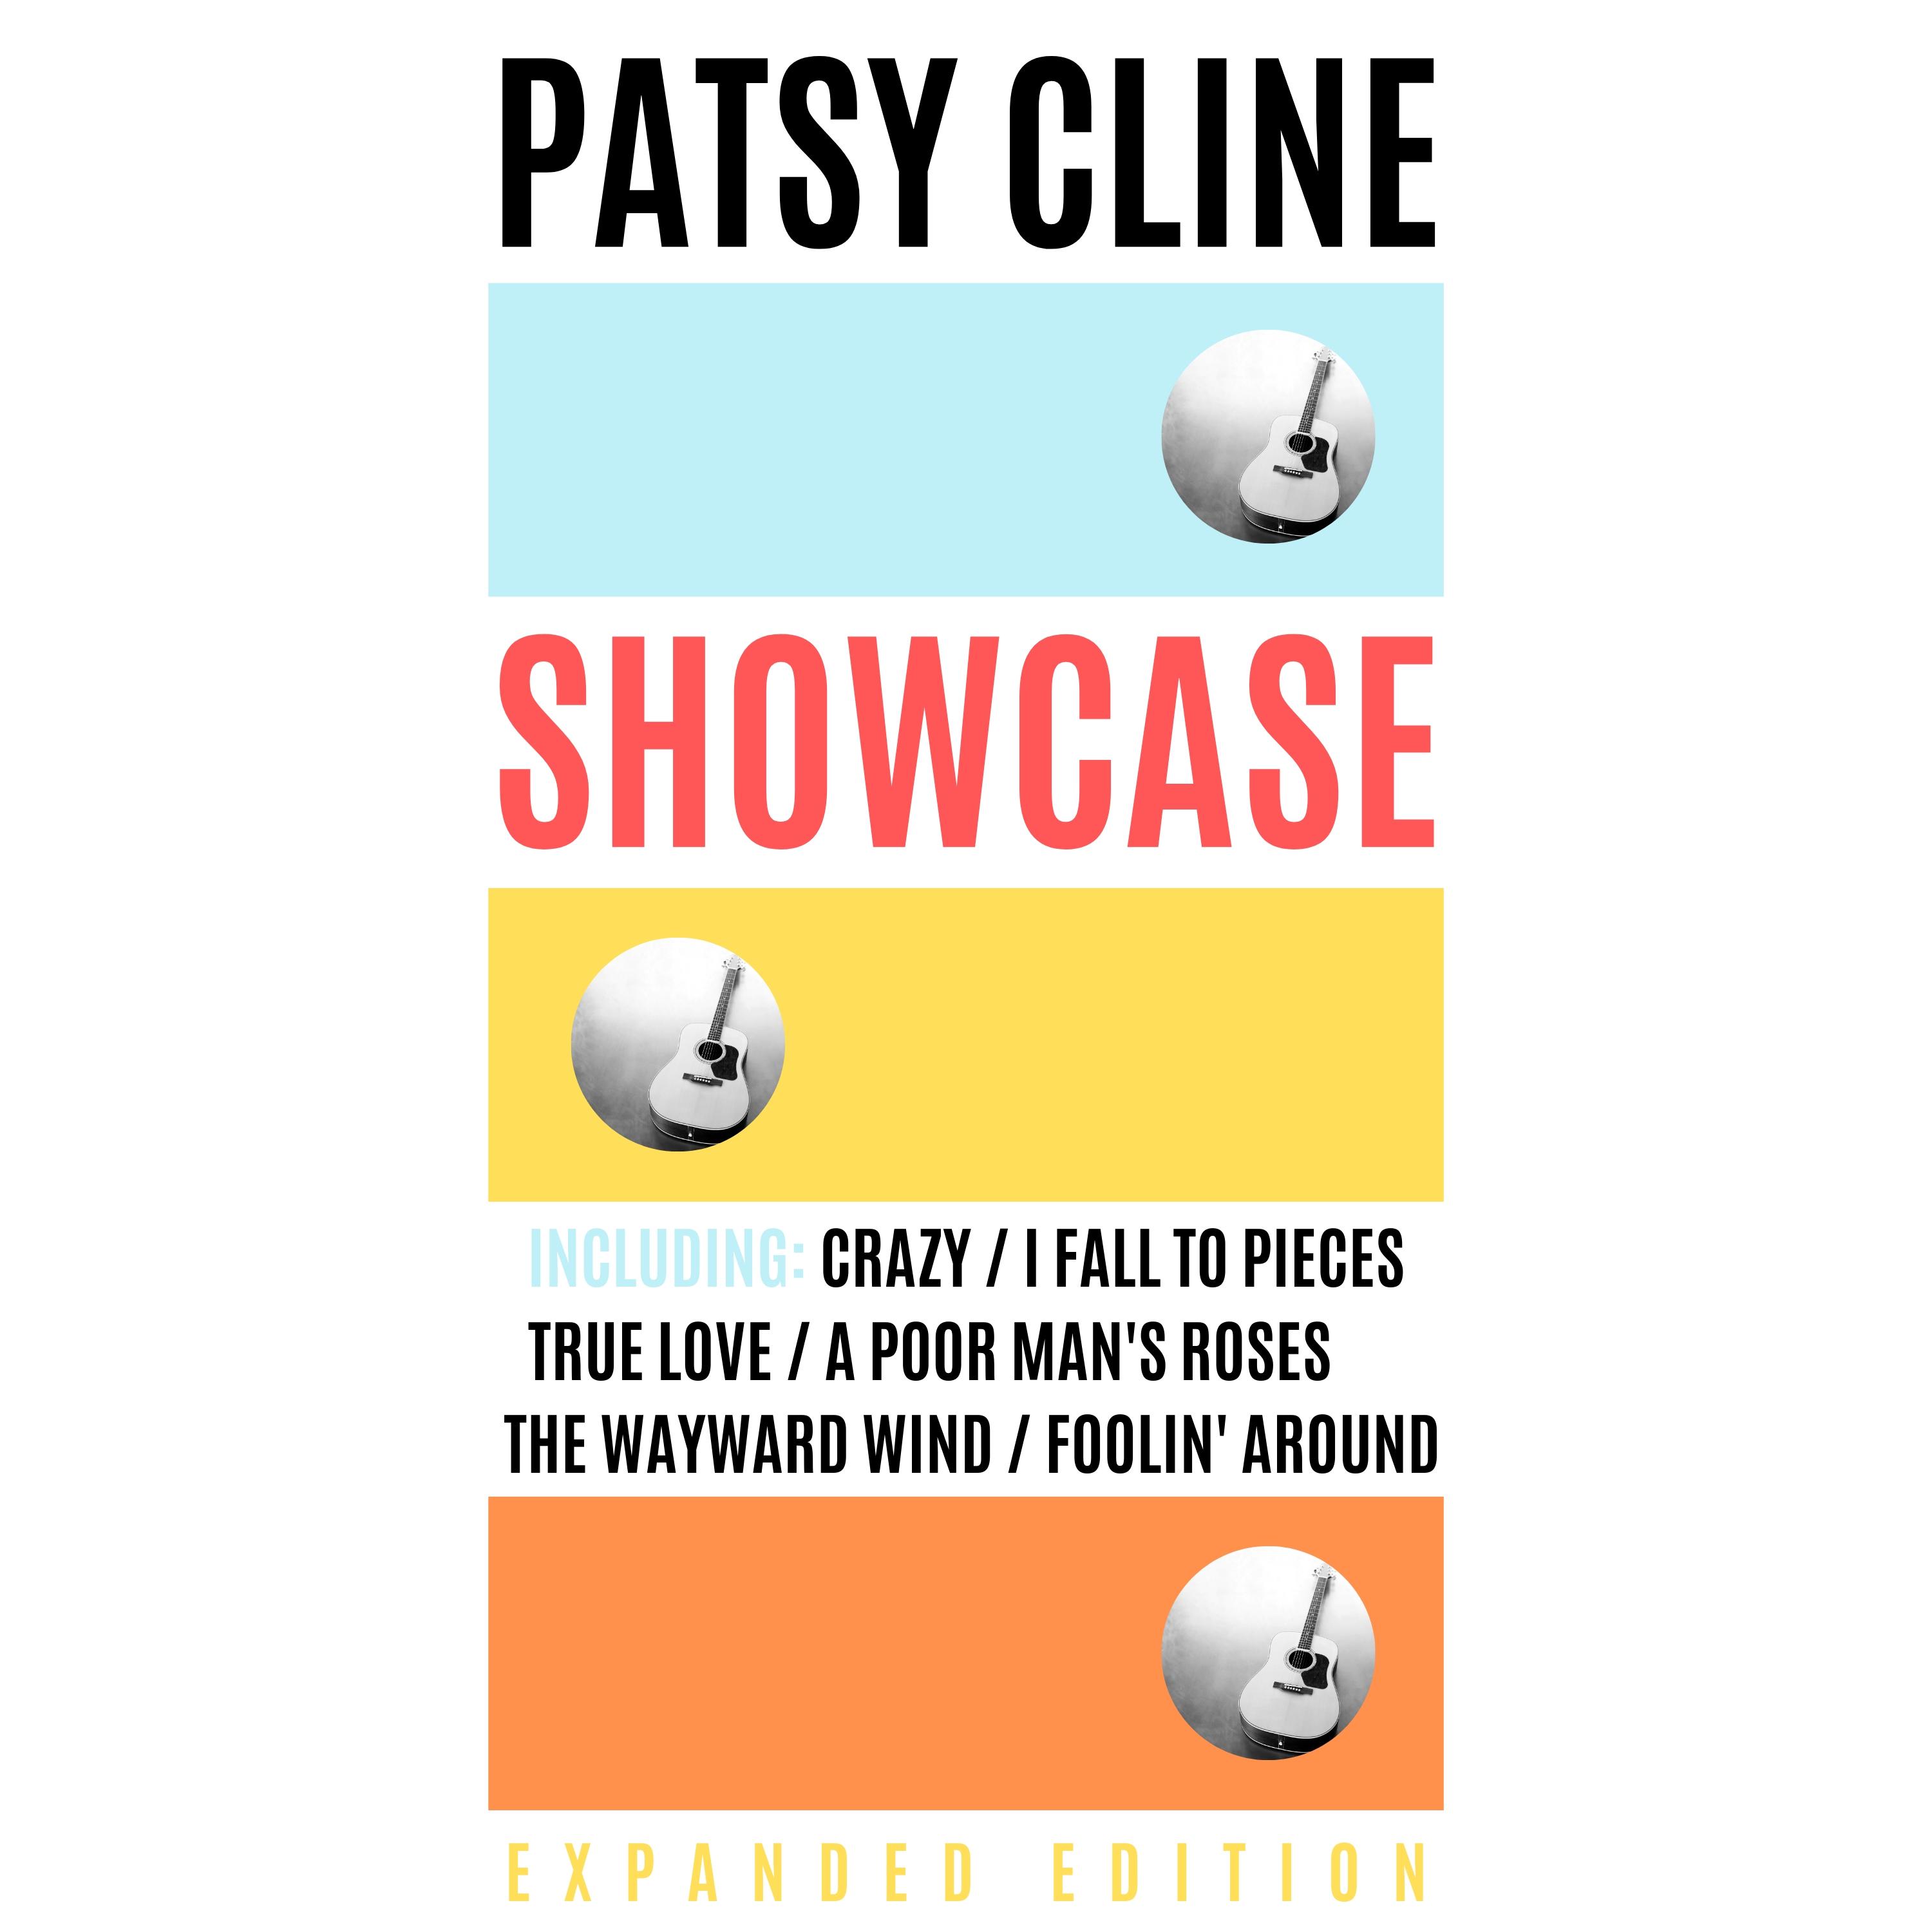 Patsy Cline - I Fall to Pieces